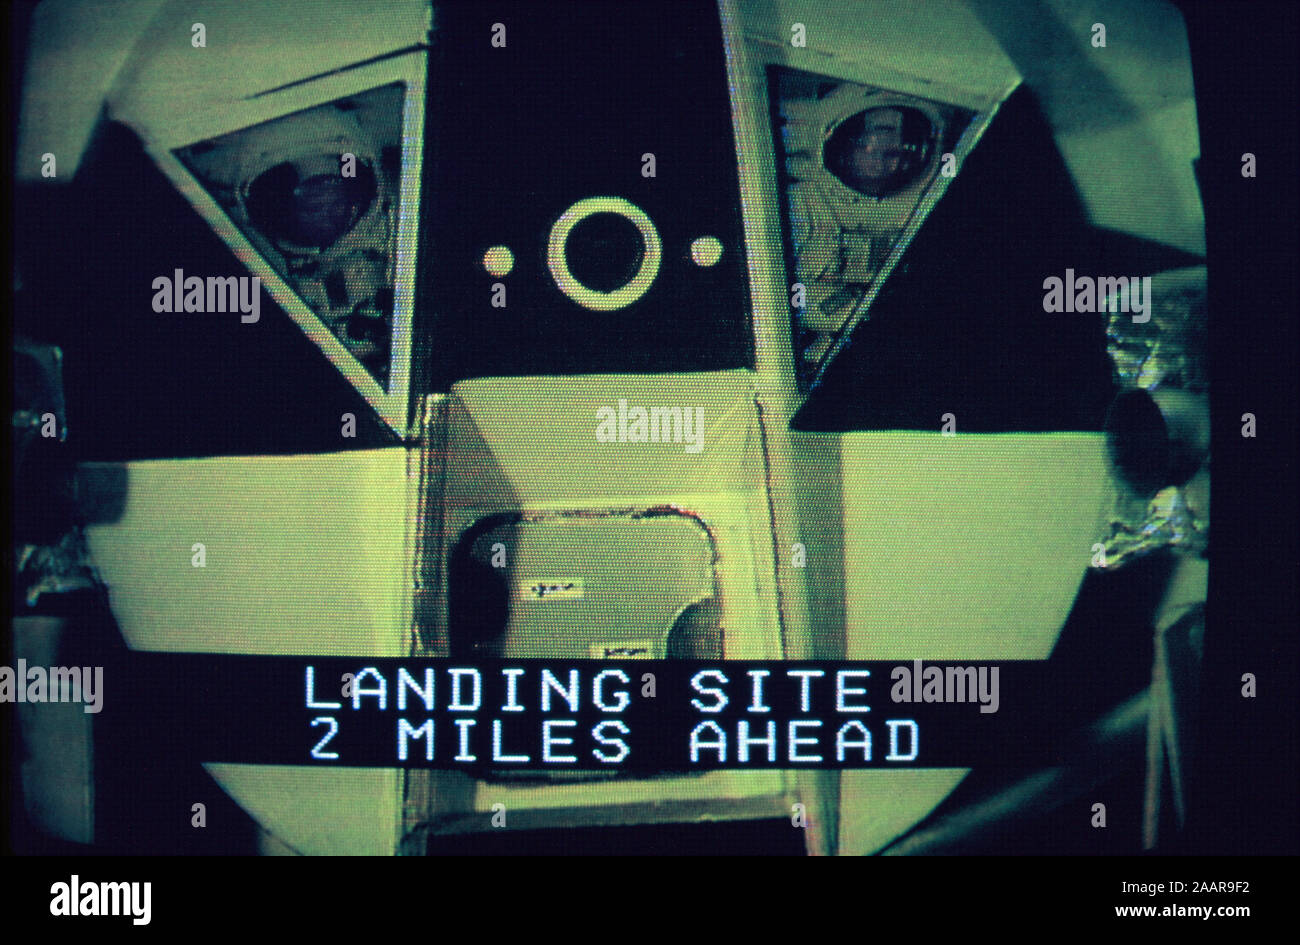 Teleclip - Apollo 11 Lunar Module with 'Landing Site 2 Miles Ahead' subtitles - photograph taken directly from TV screen - circa 1972 Stock Photo